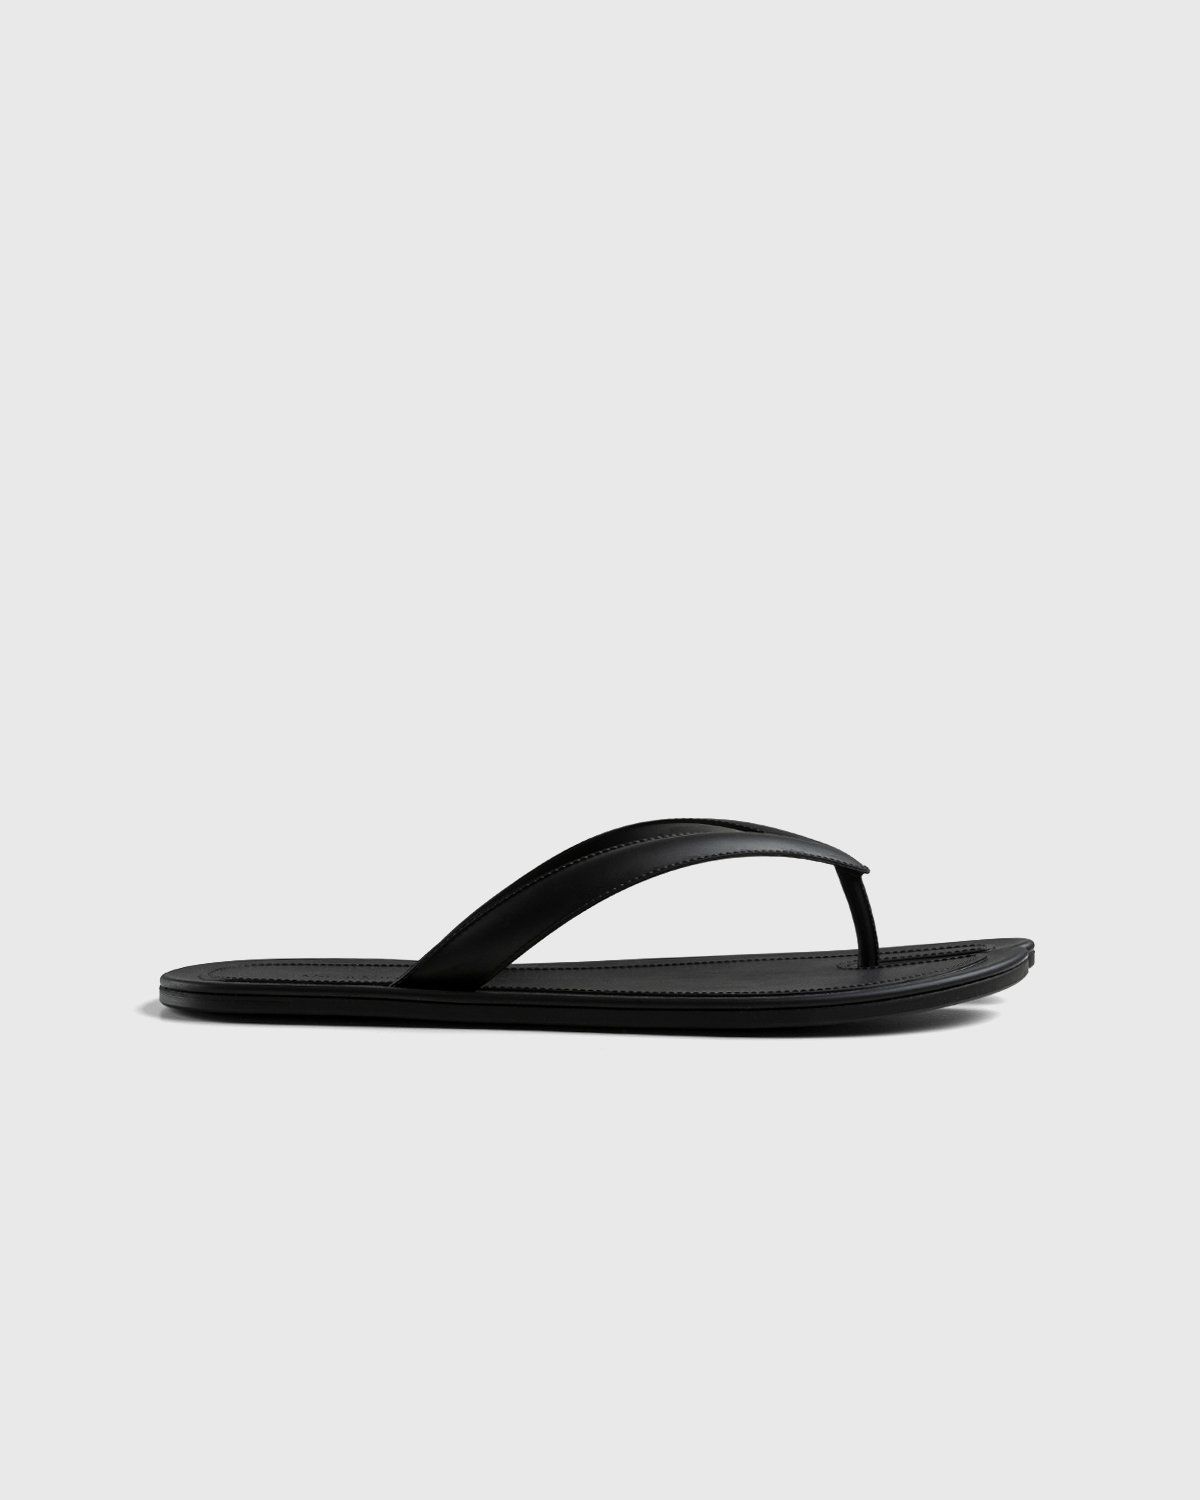 Maison Margiela – Tabi Flip-Flops Black - Sandals - Black - Image 2